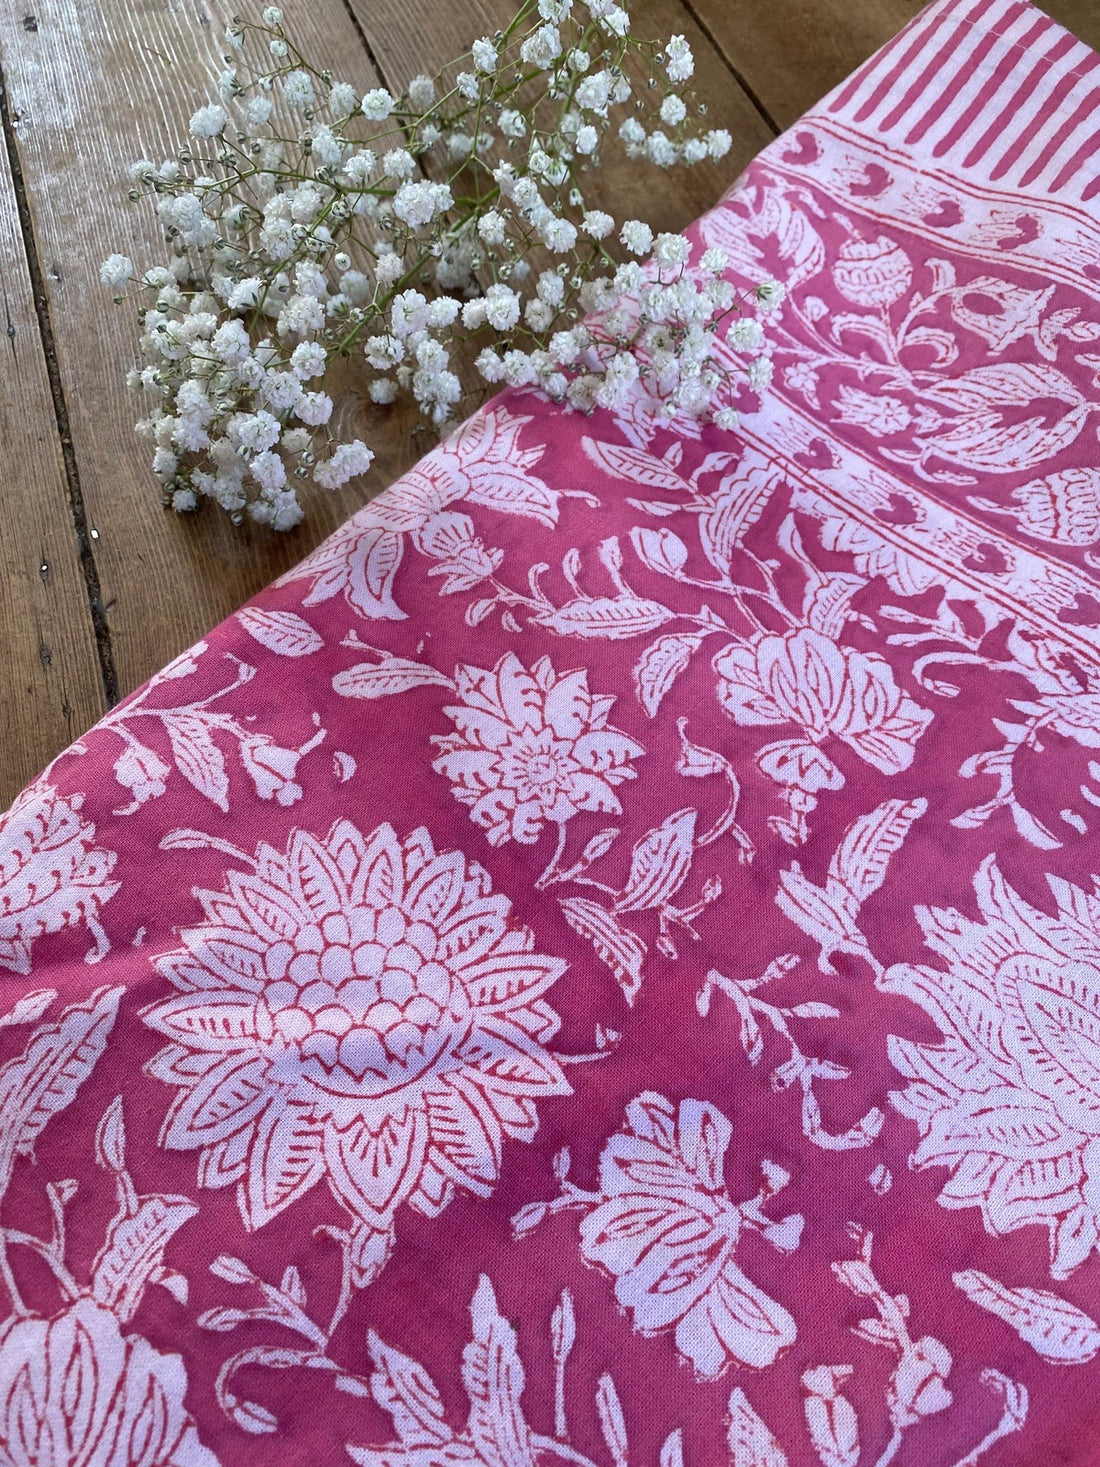 Indian Block Print Tablecloth - Pink Floral